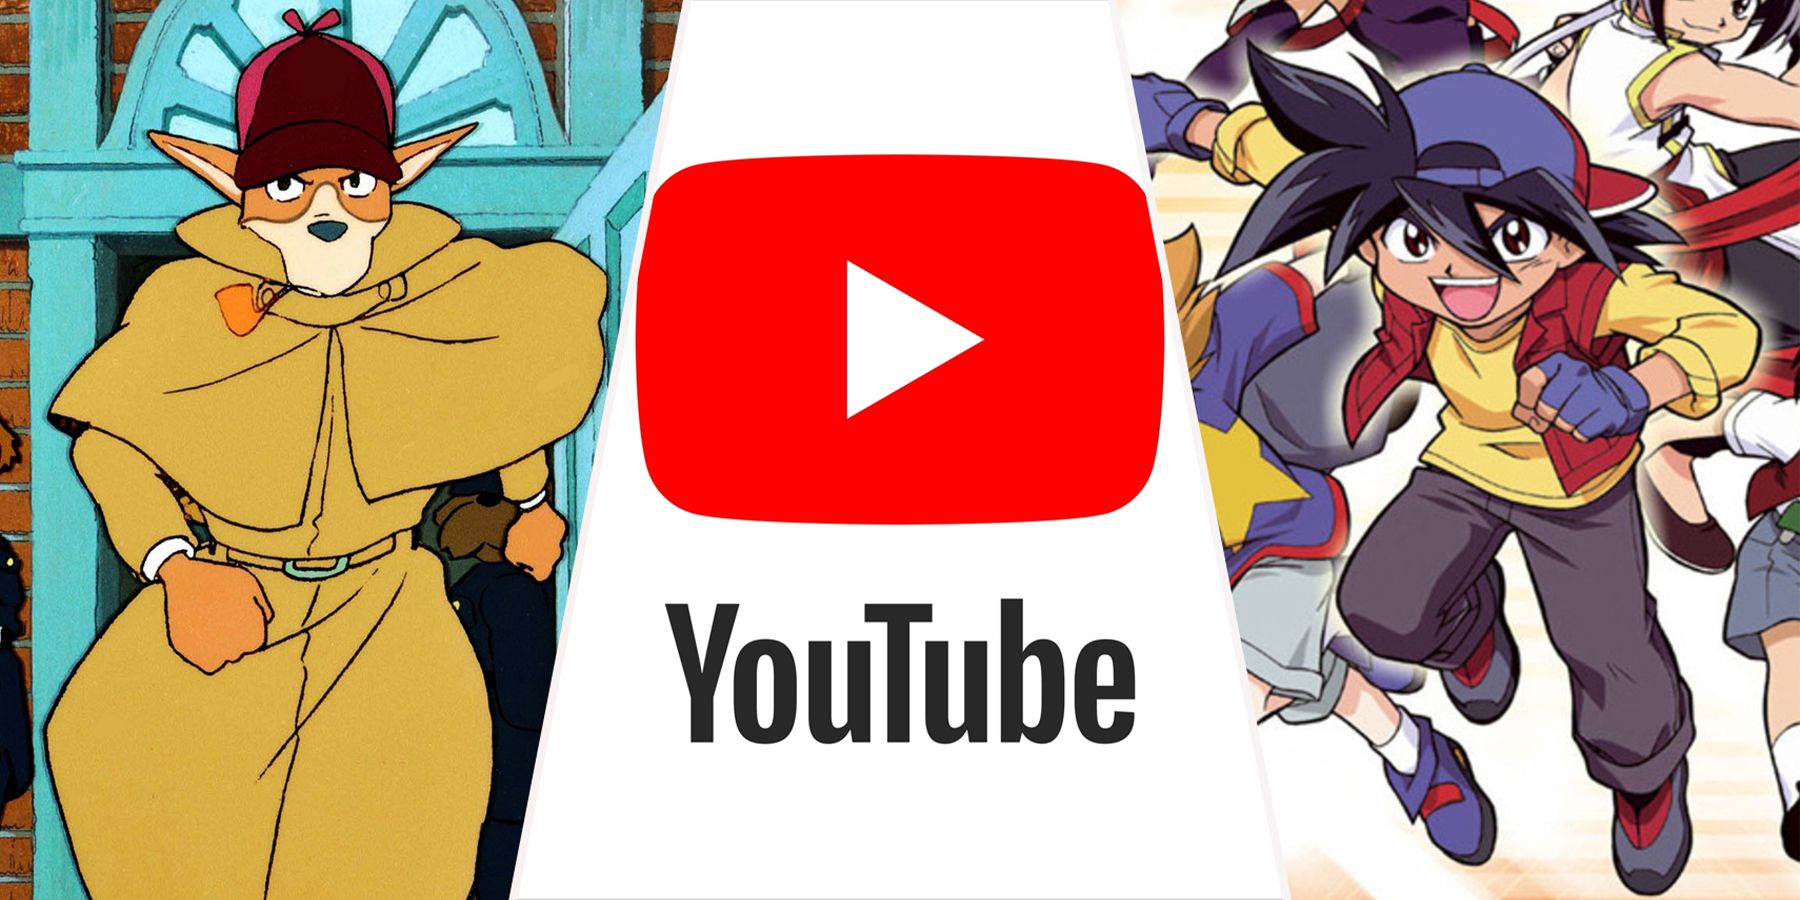 youtube free anime beyblade sherlock hound